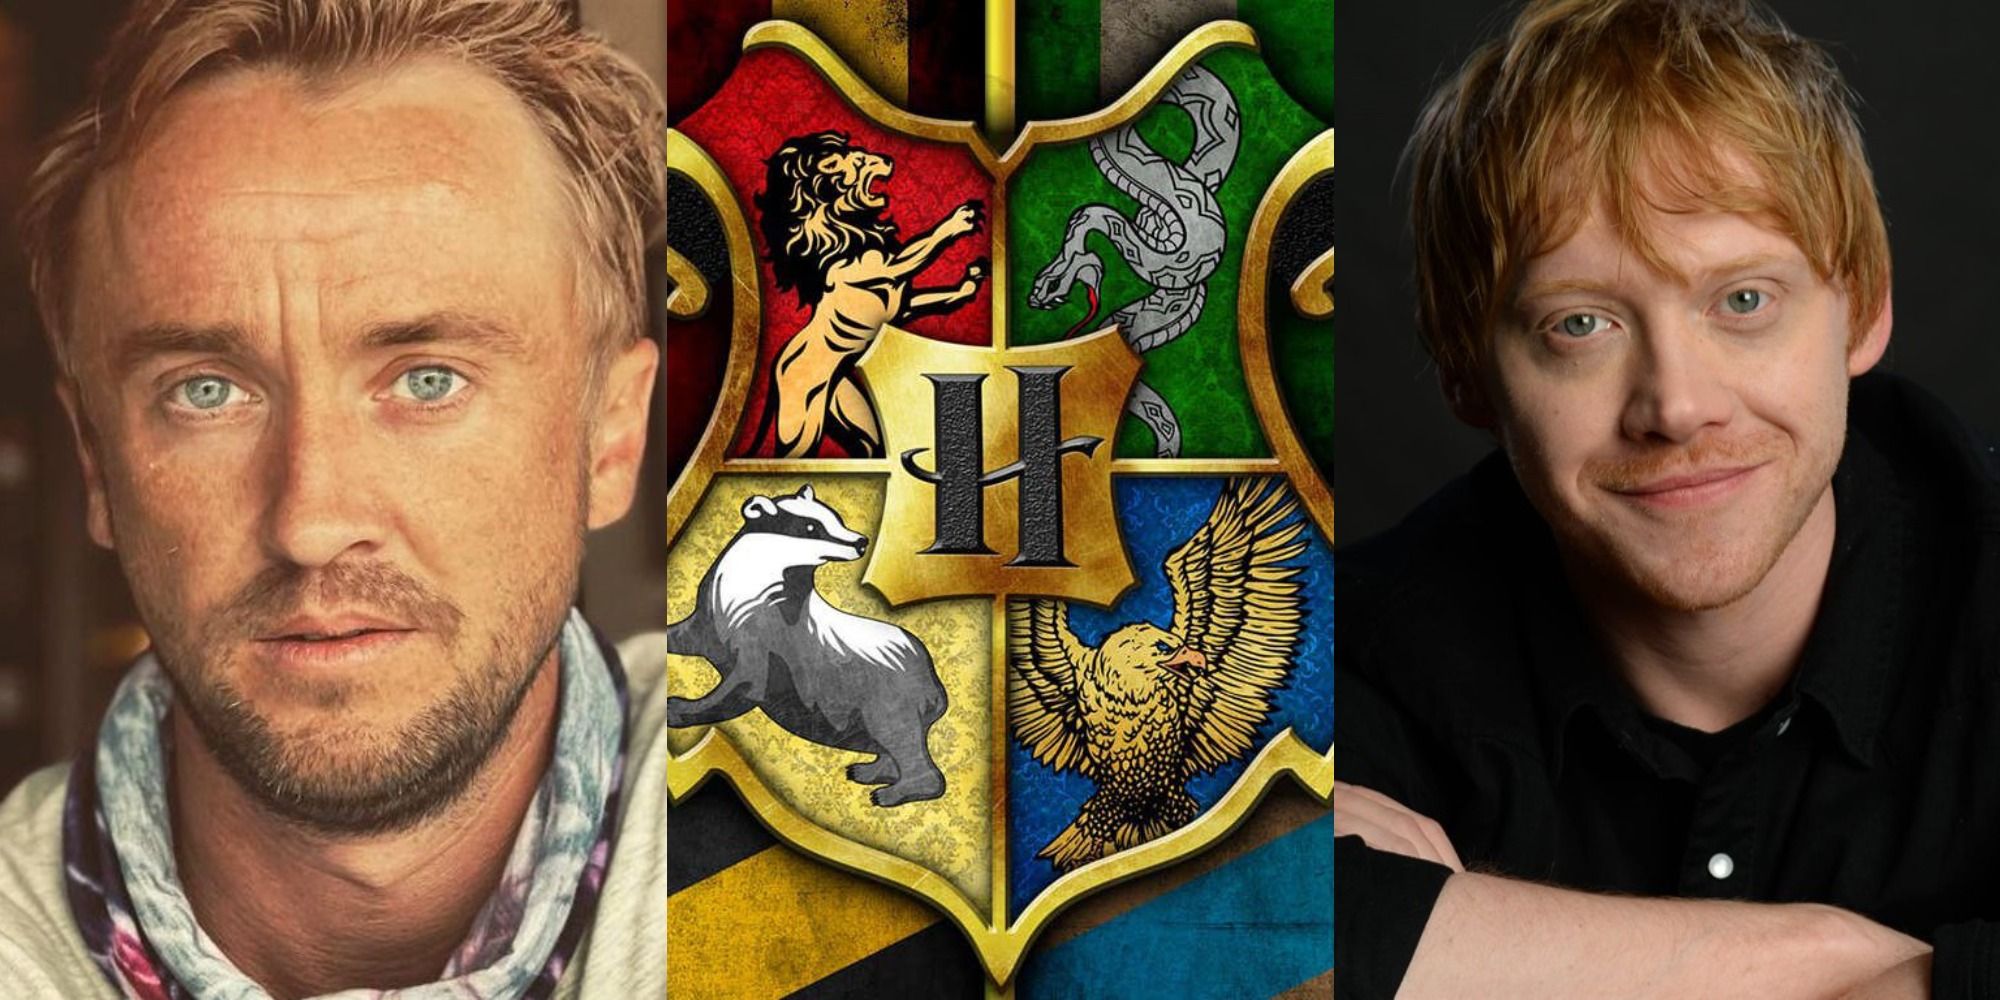 Split image showing Tom Felton, the Hogwarts coat of arms, and Rupert Grint